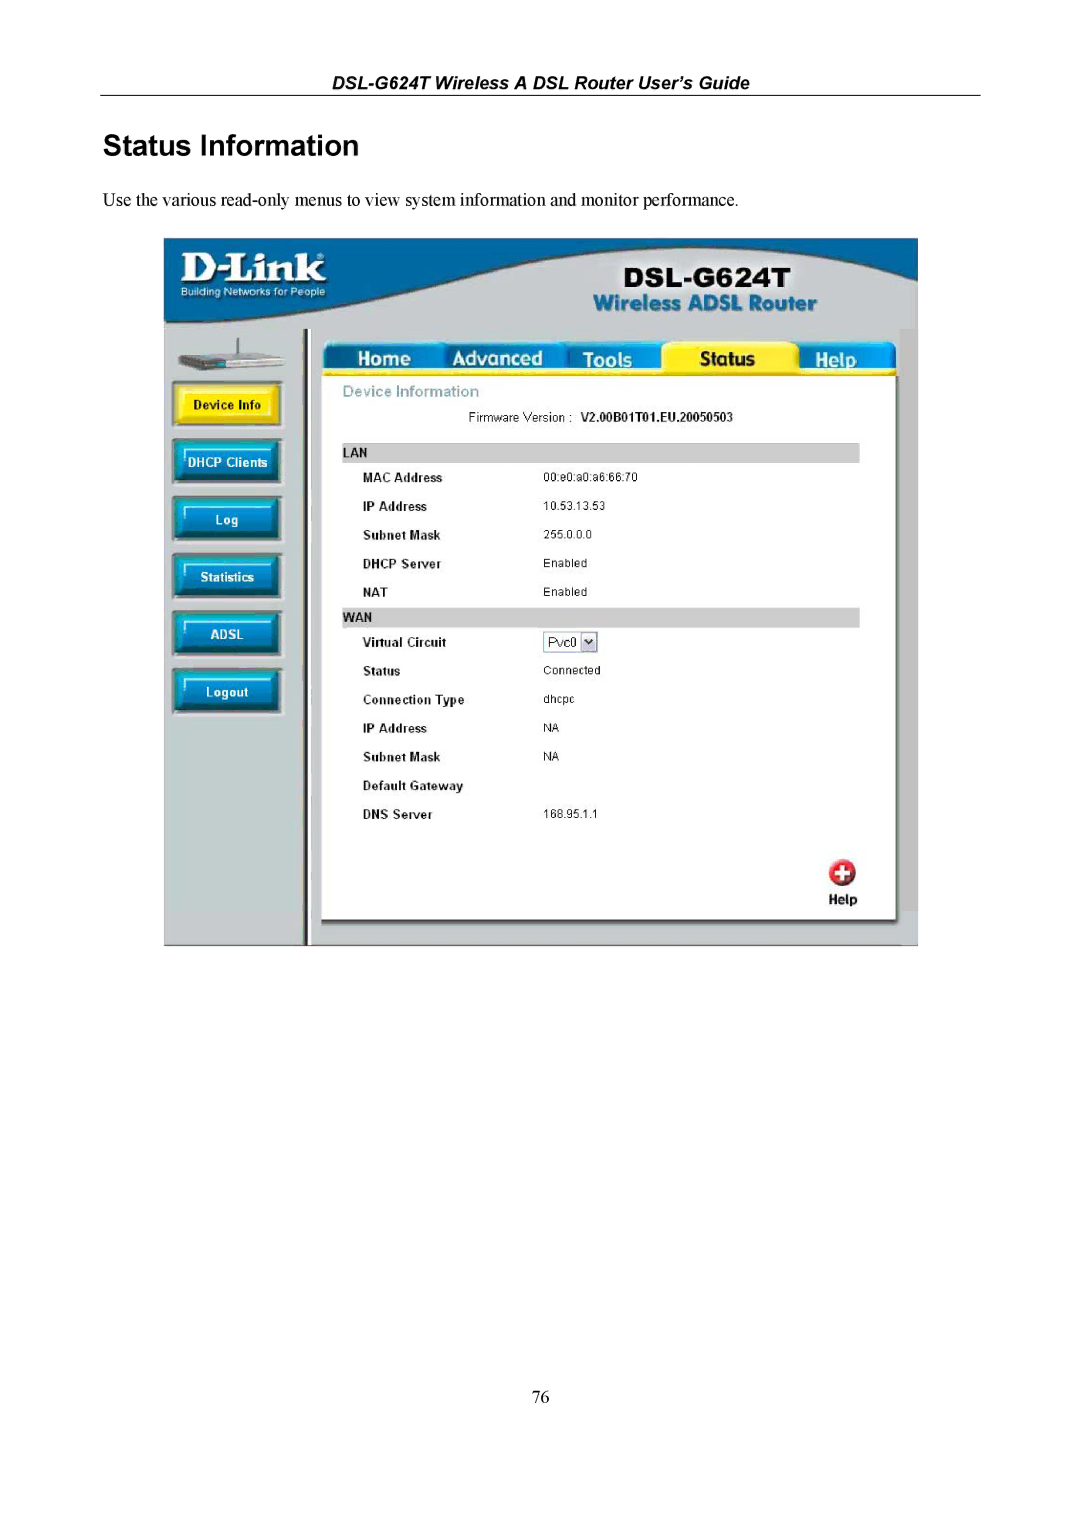 D-Link DSL-G624T, D-Link Wireless ADSL Router manual Status Information 